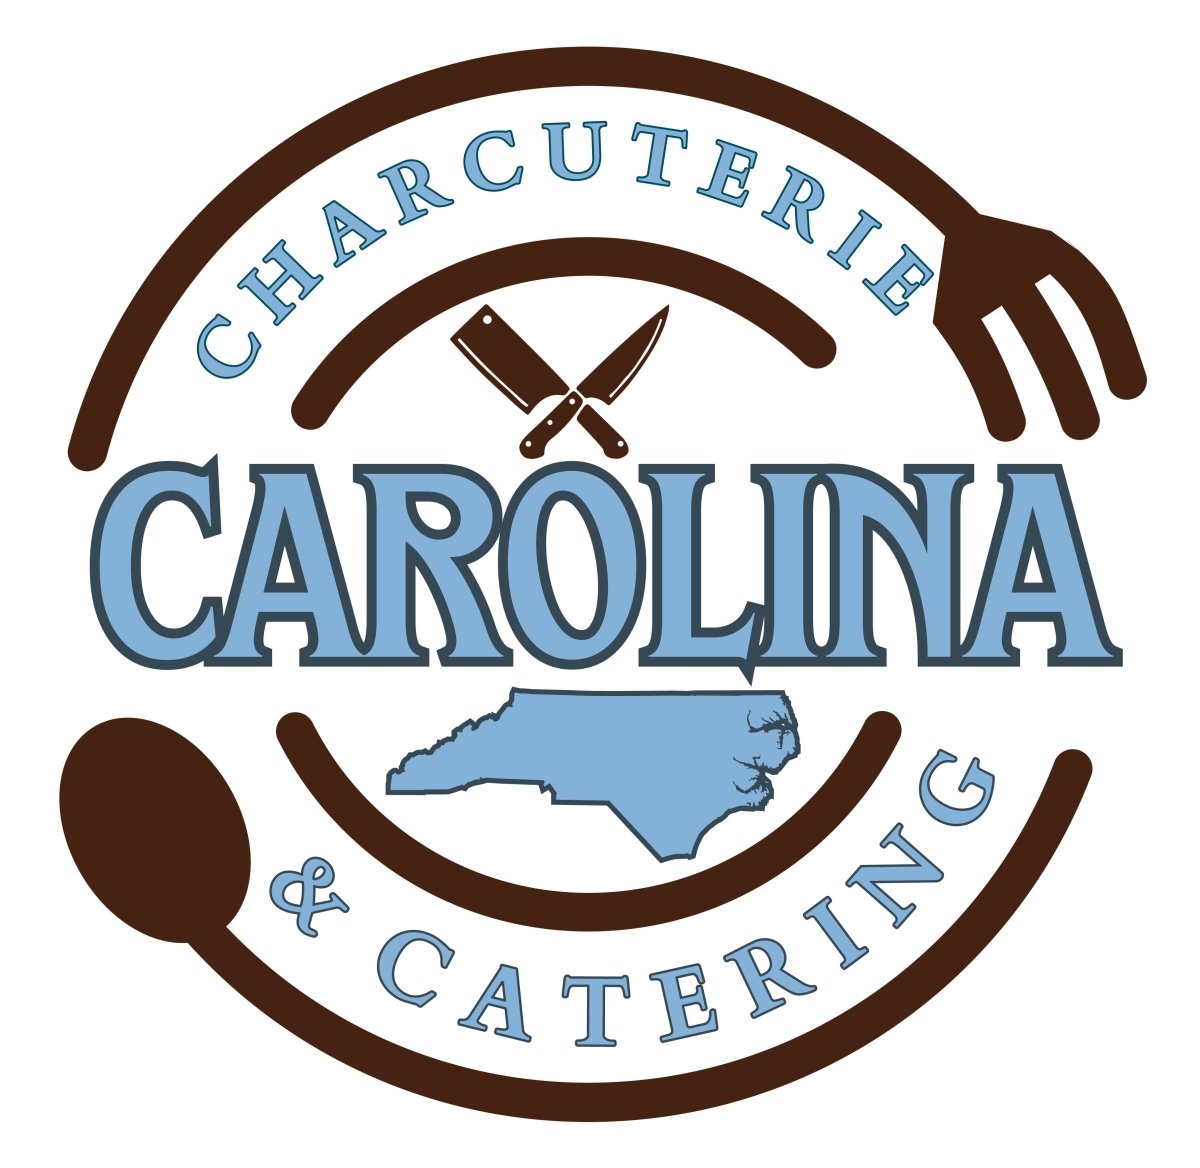 Carolina Charcuterie & Catering Gift Card - Carolina Charcuterie Co.